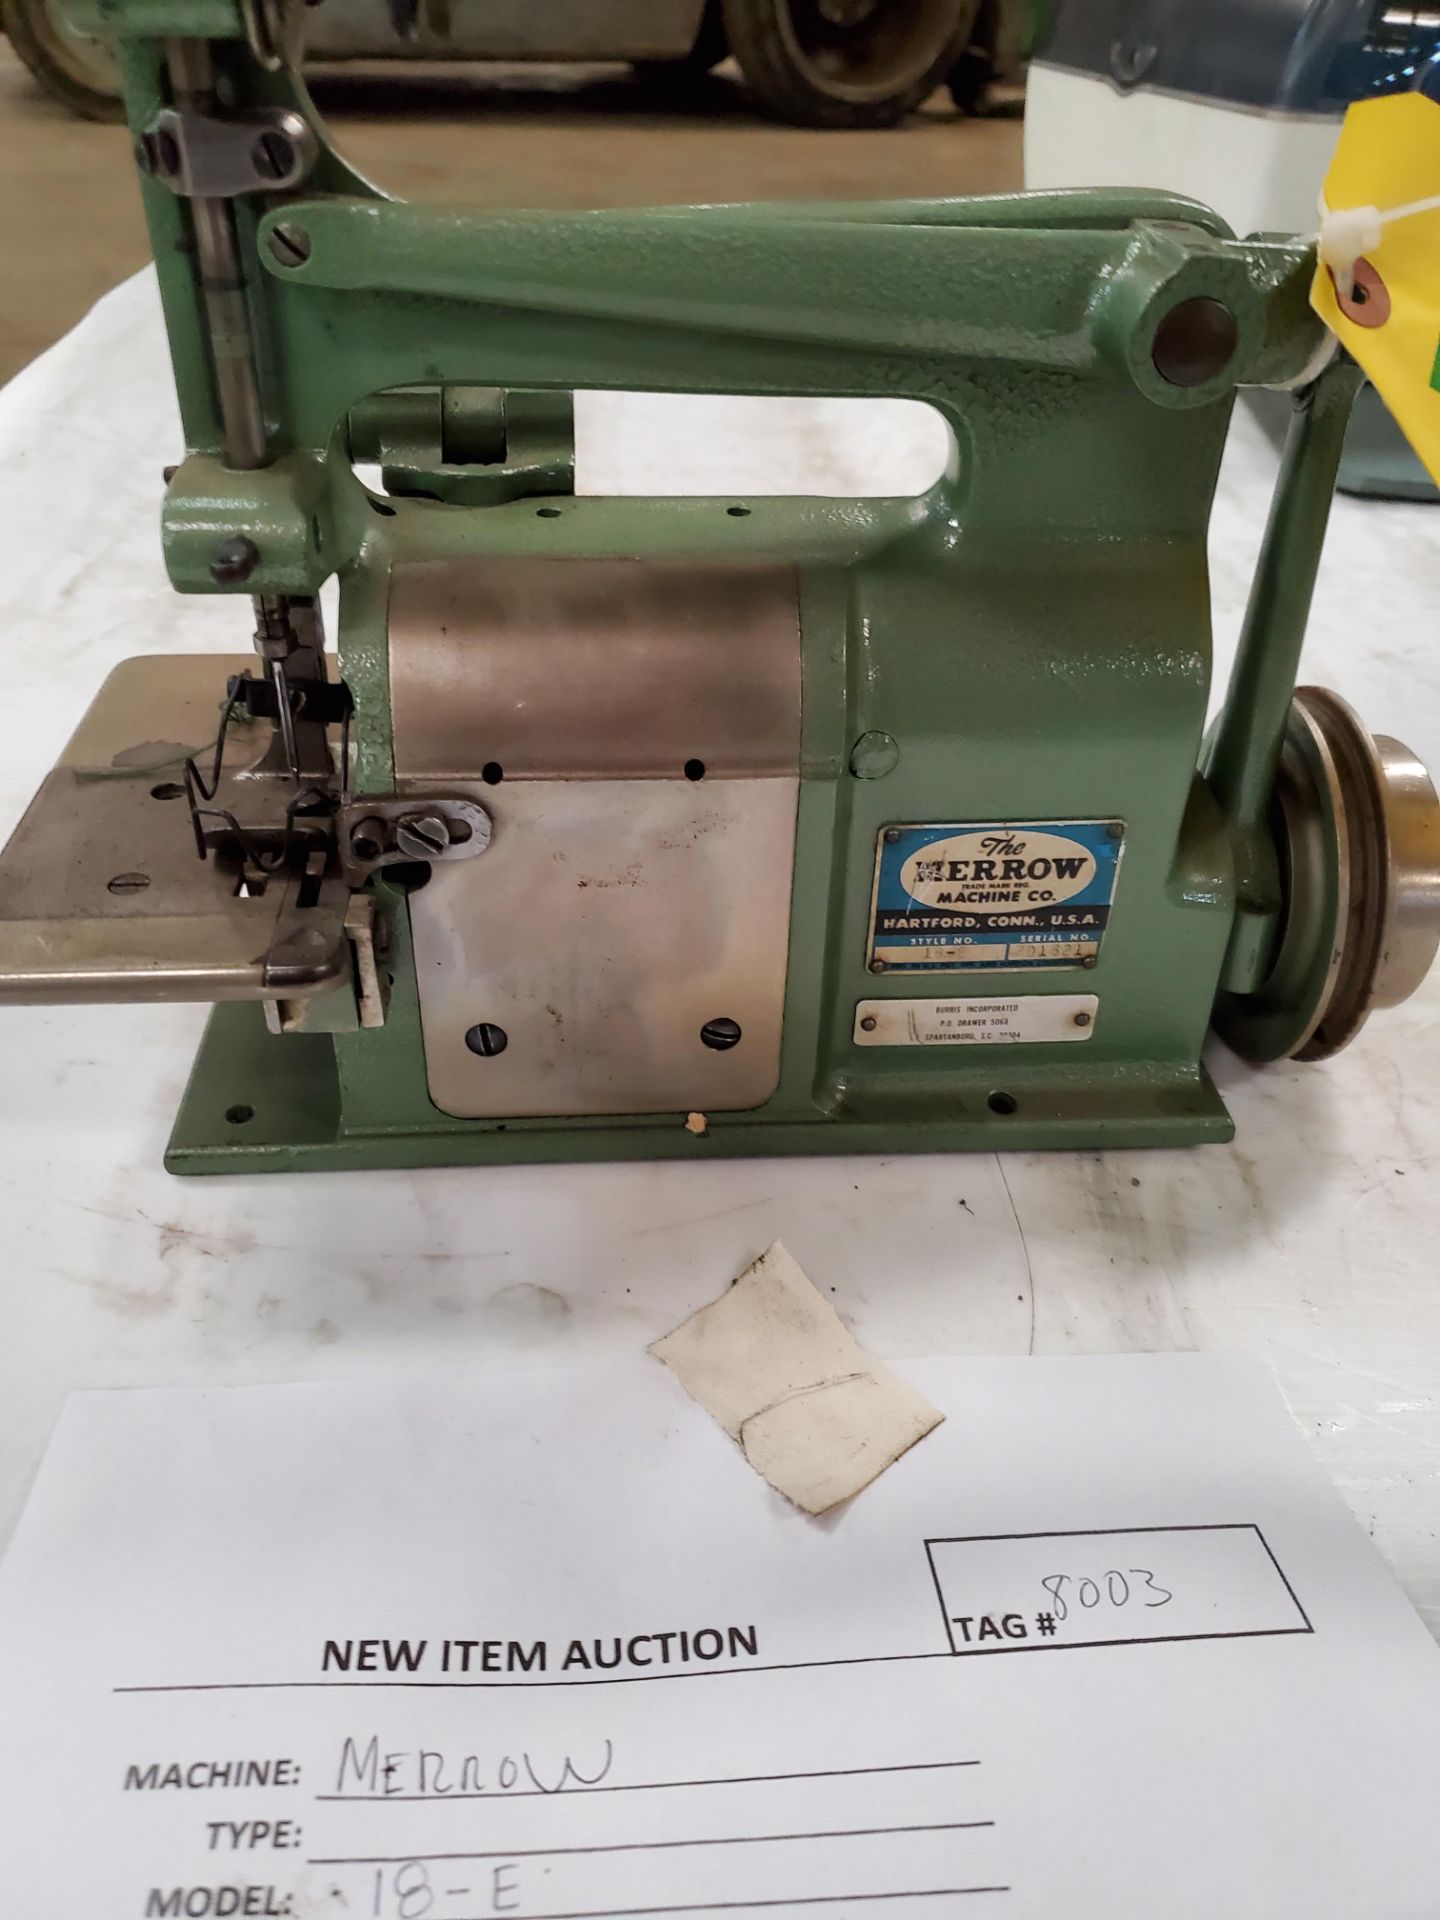 Merrow 18-E Crochet Stitch Industrial Sewing Machine, Rigging Fee $20